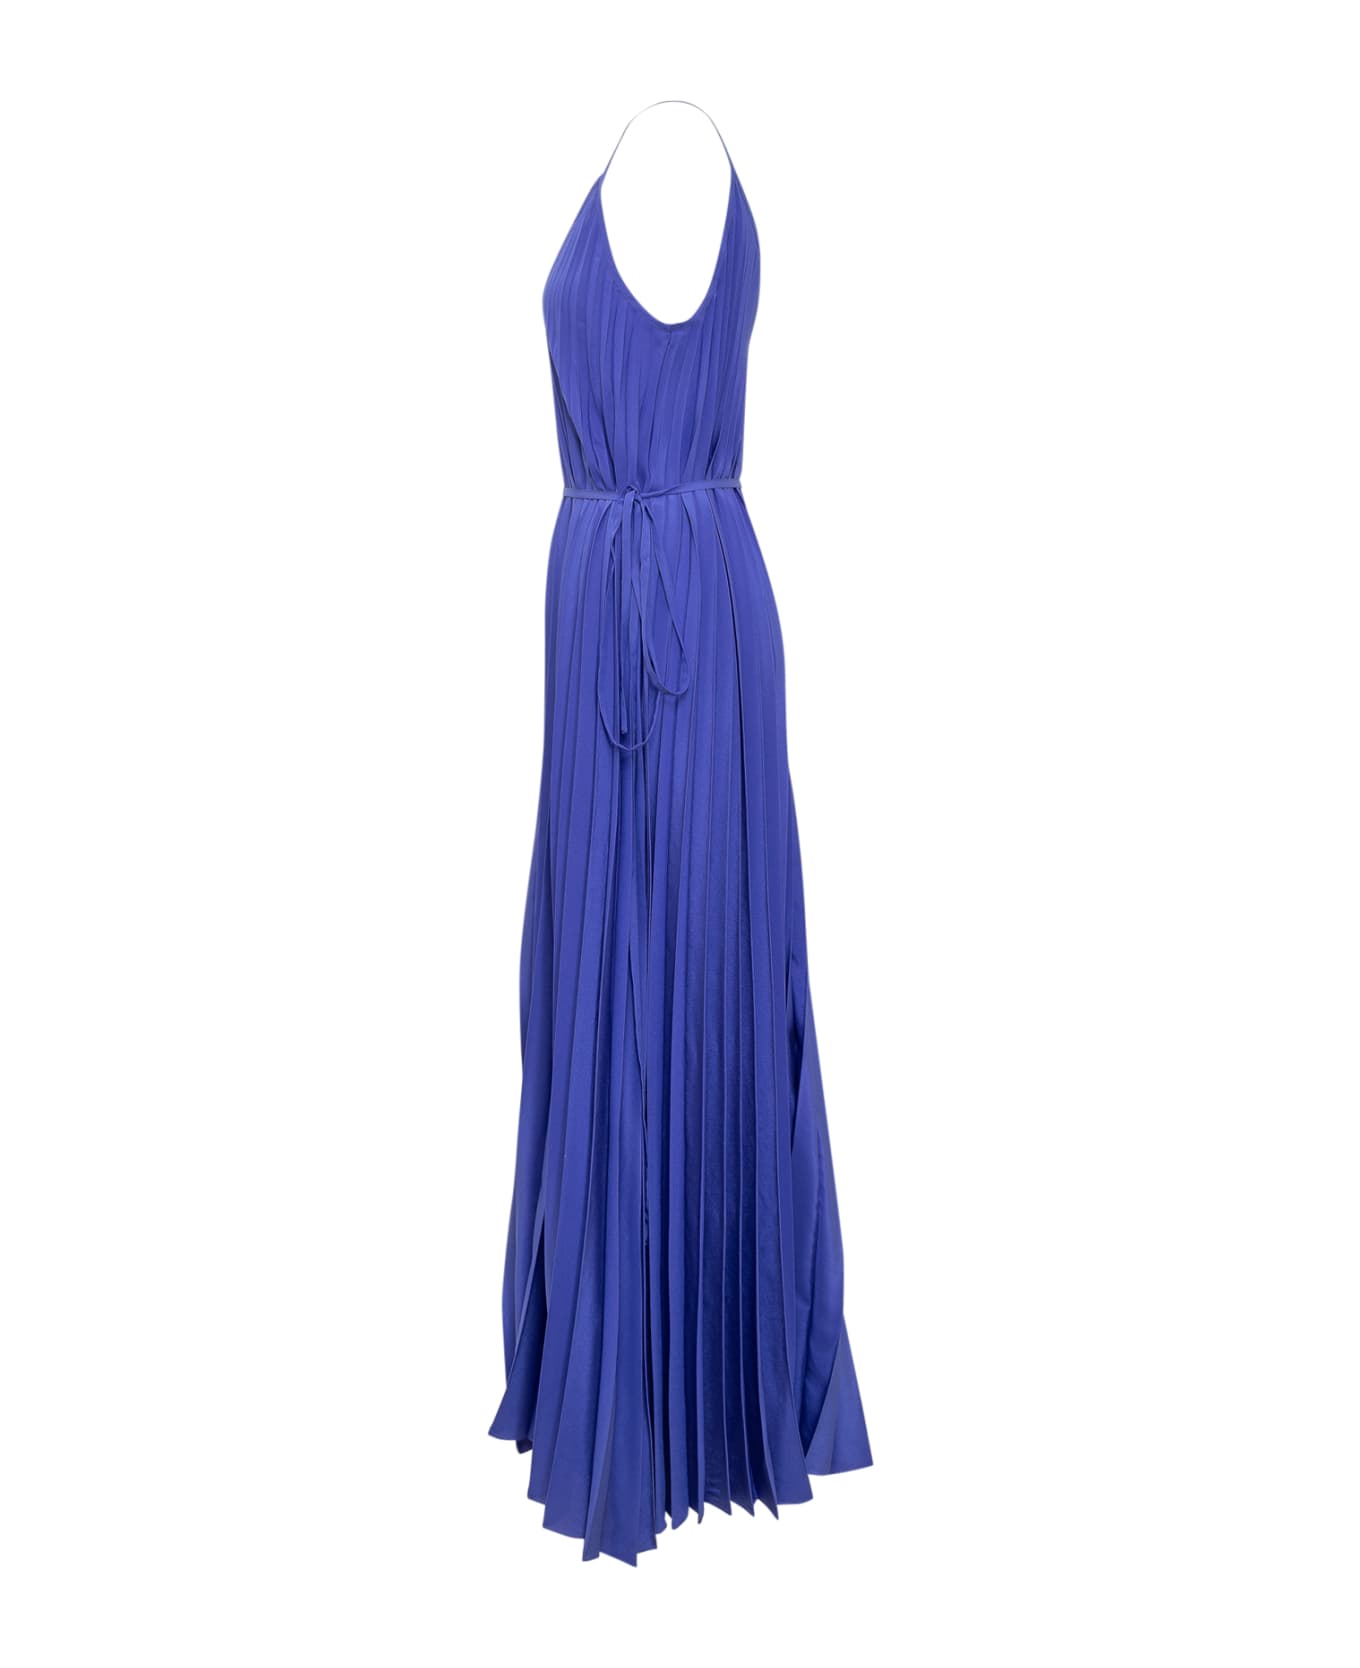 Parosh Pleated Dress - BLUETTE ジャンプスーツ